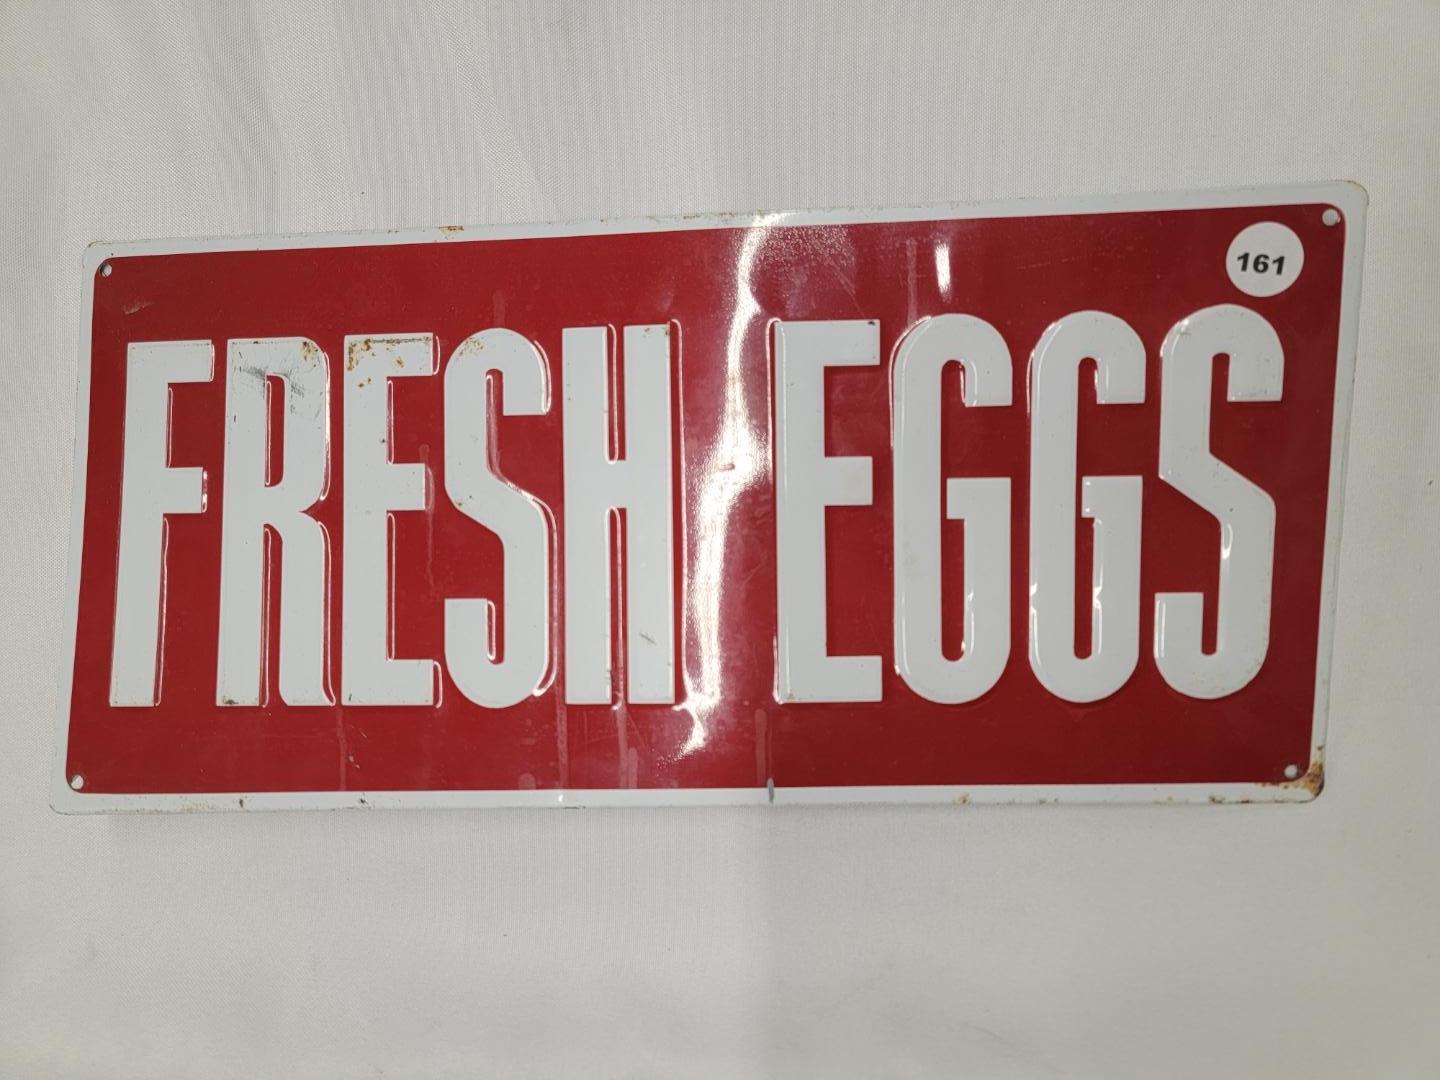 6 1/2  x 14 in. Fresh Eggs Metal Sign